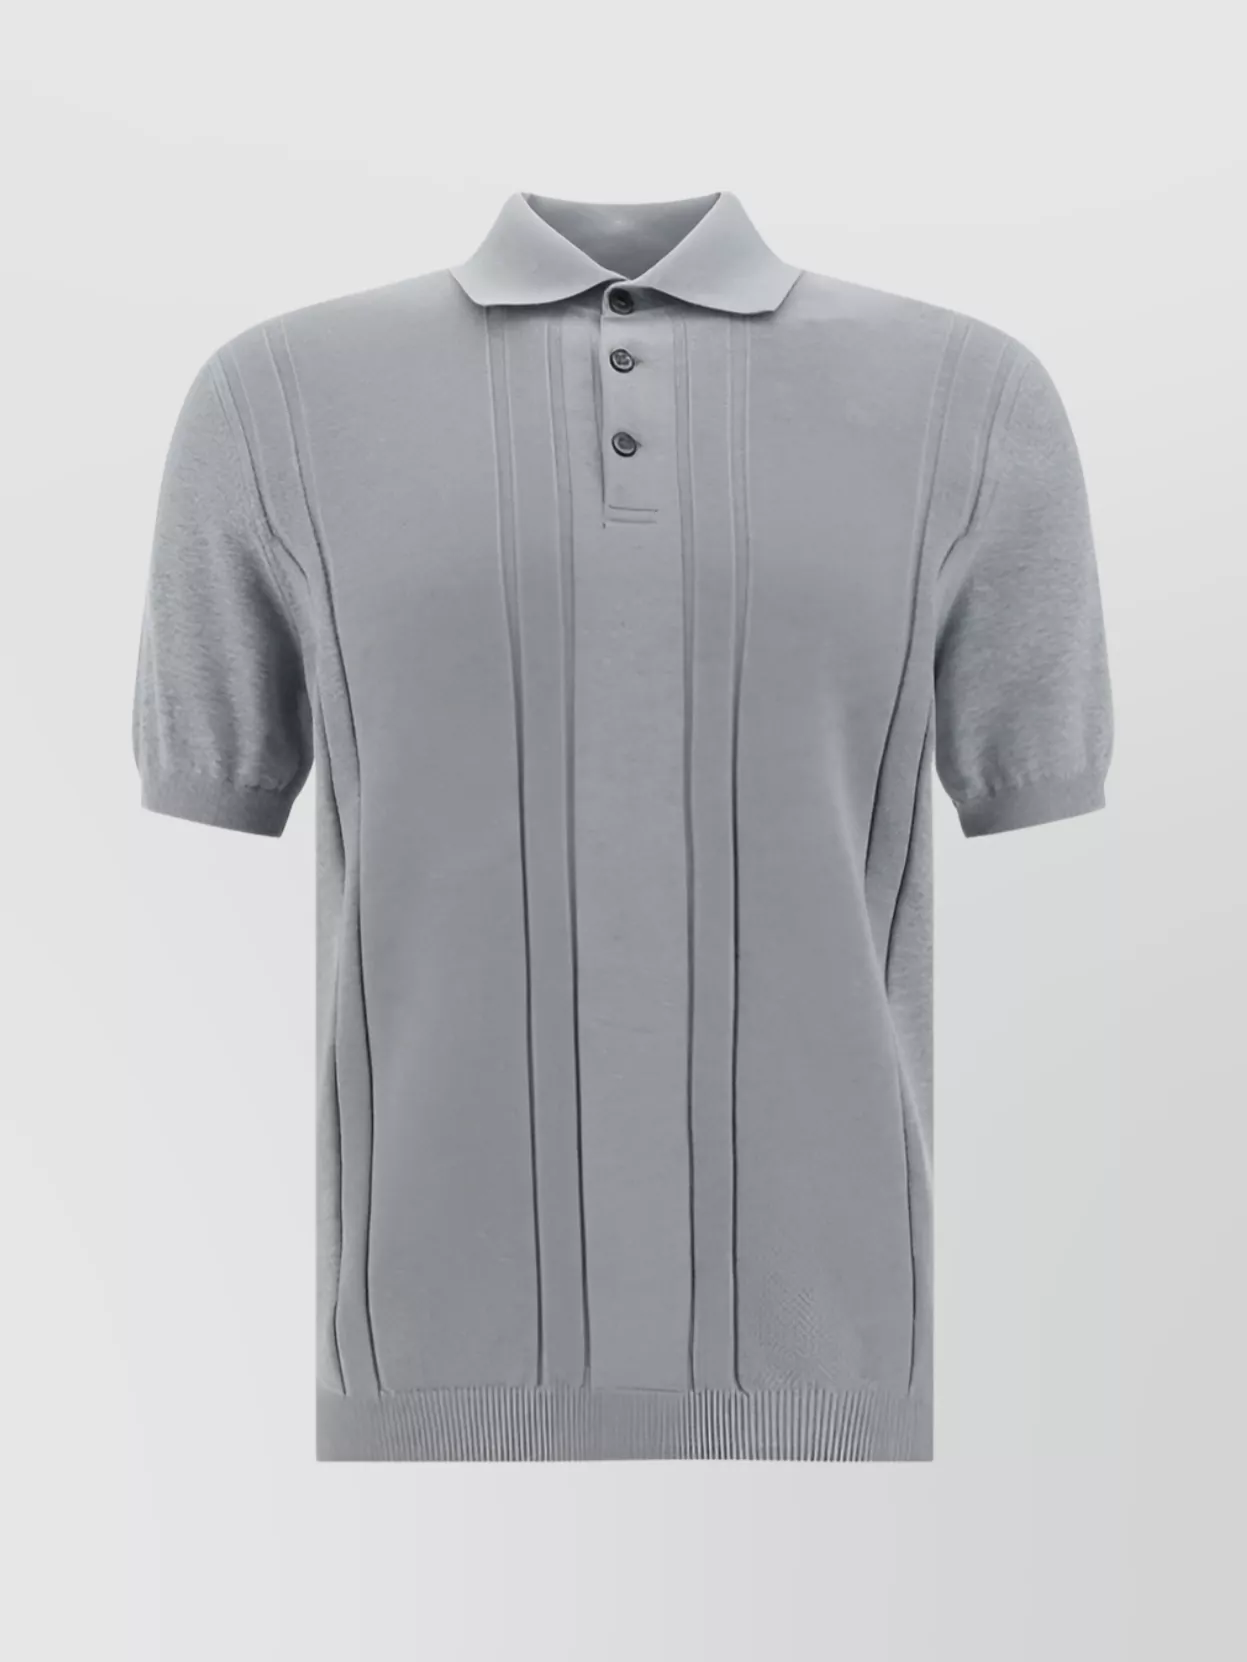 Brunello Cucinelli Collared Cotton Knit Polo Shirt In Gray